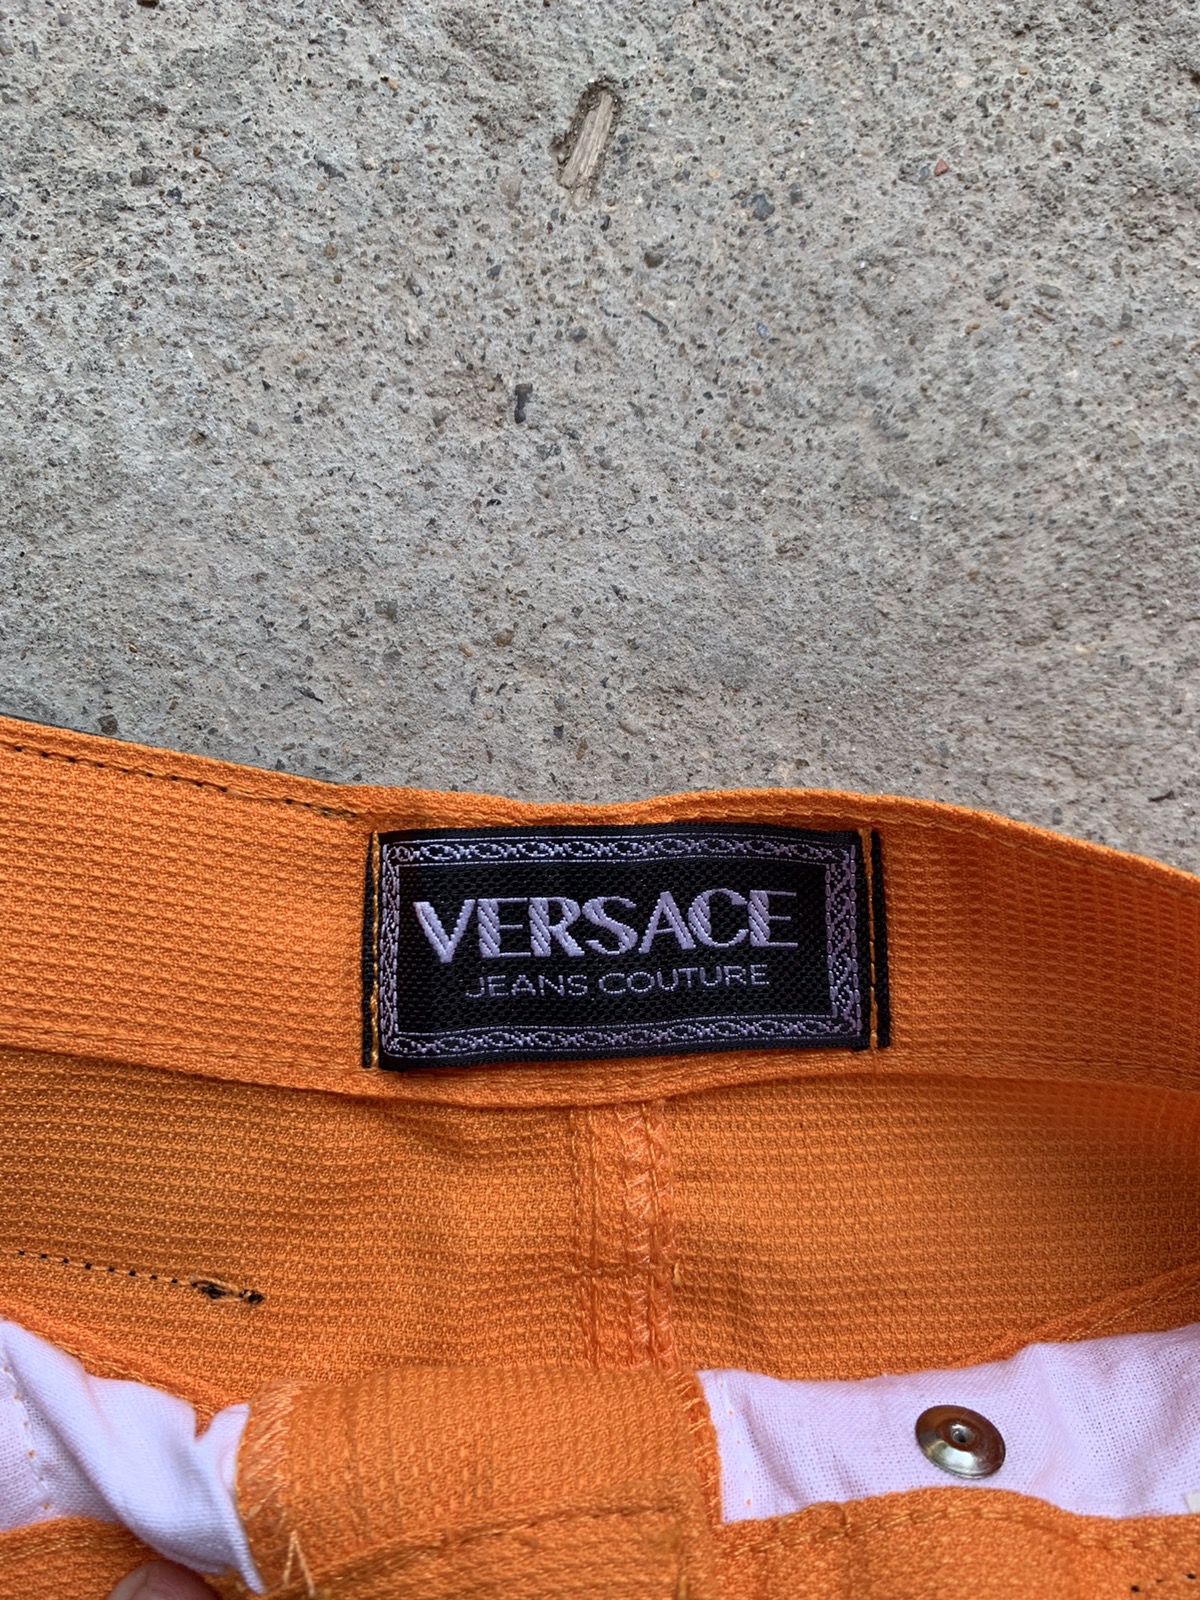 Authentic versace skirt - 9